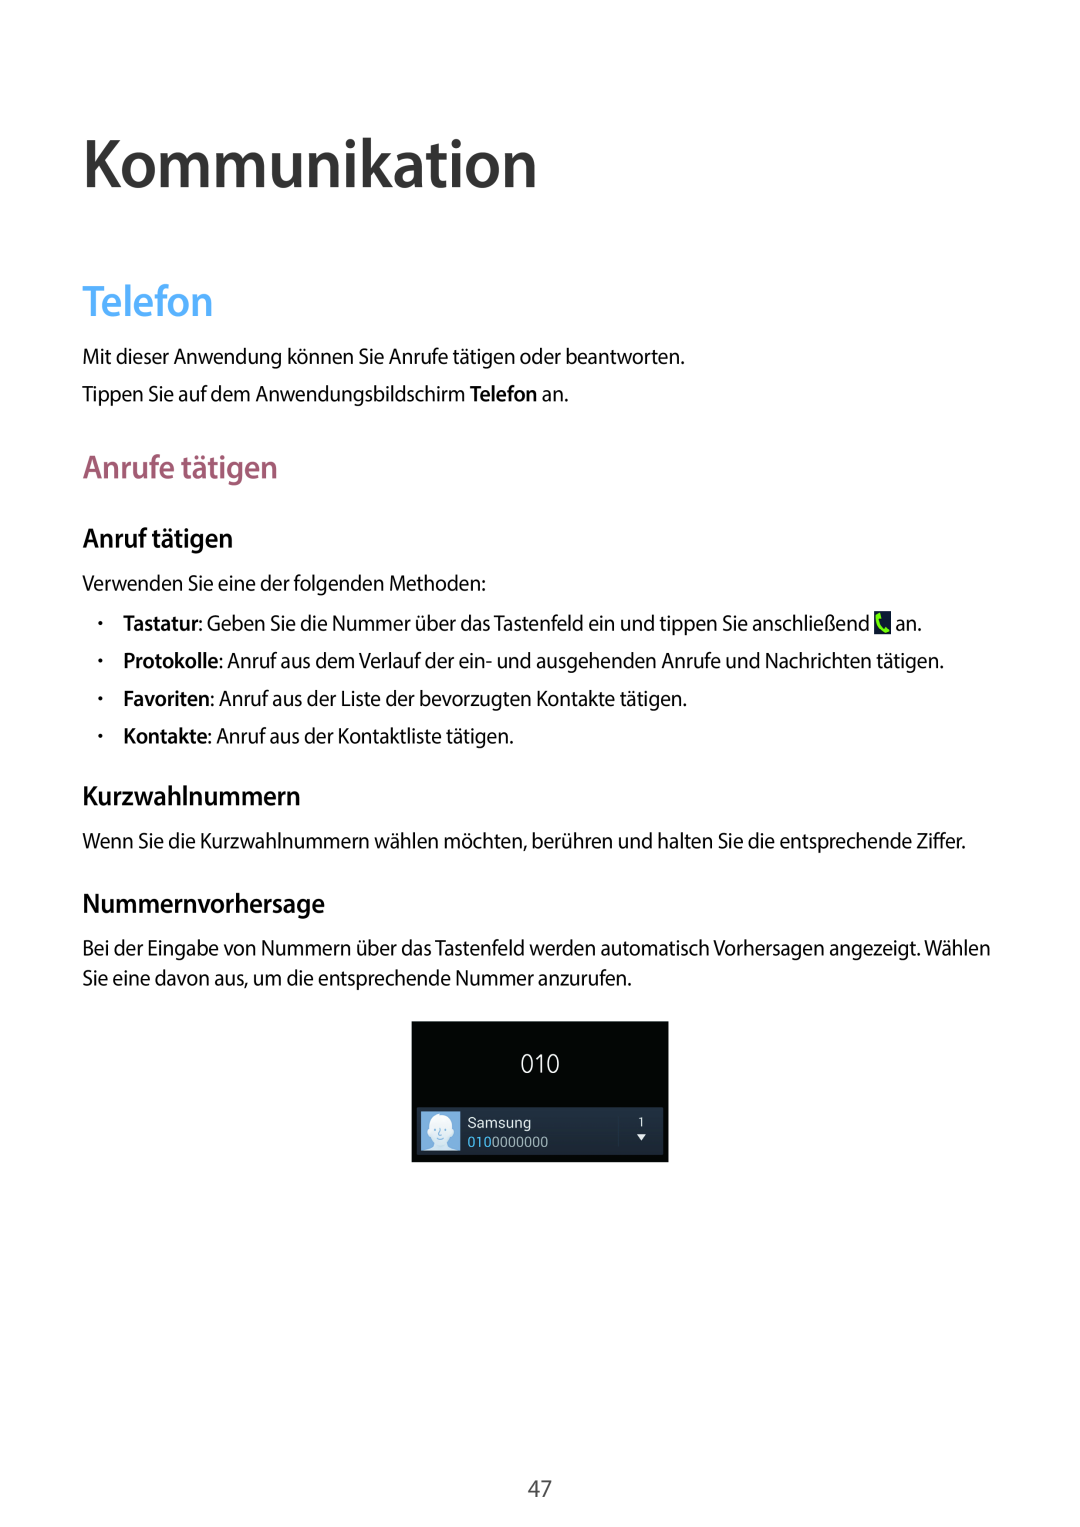 Samsung SM-C1010ZKADBT manual Kommunikation, Telefon, Anrufe tätigen, Anruf tätigen, Kurzwahlnummern, Nummernvorhersage 